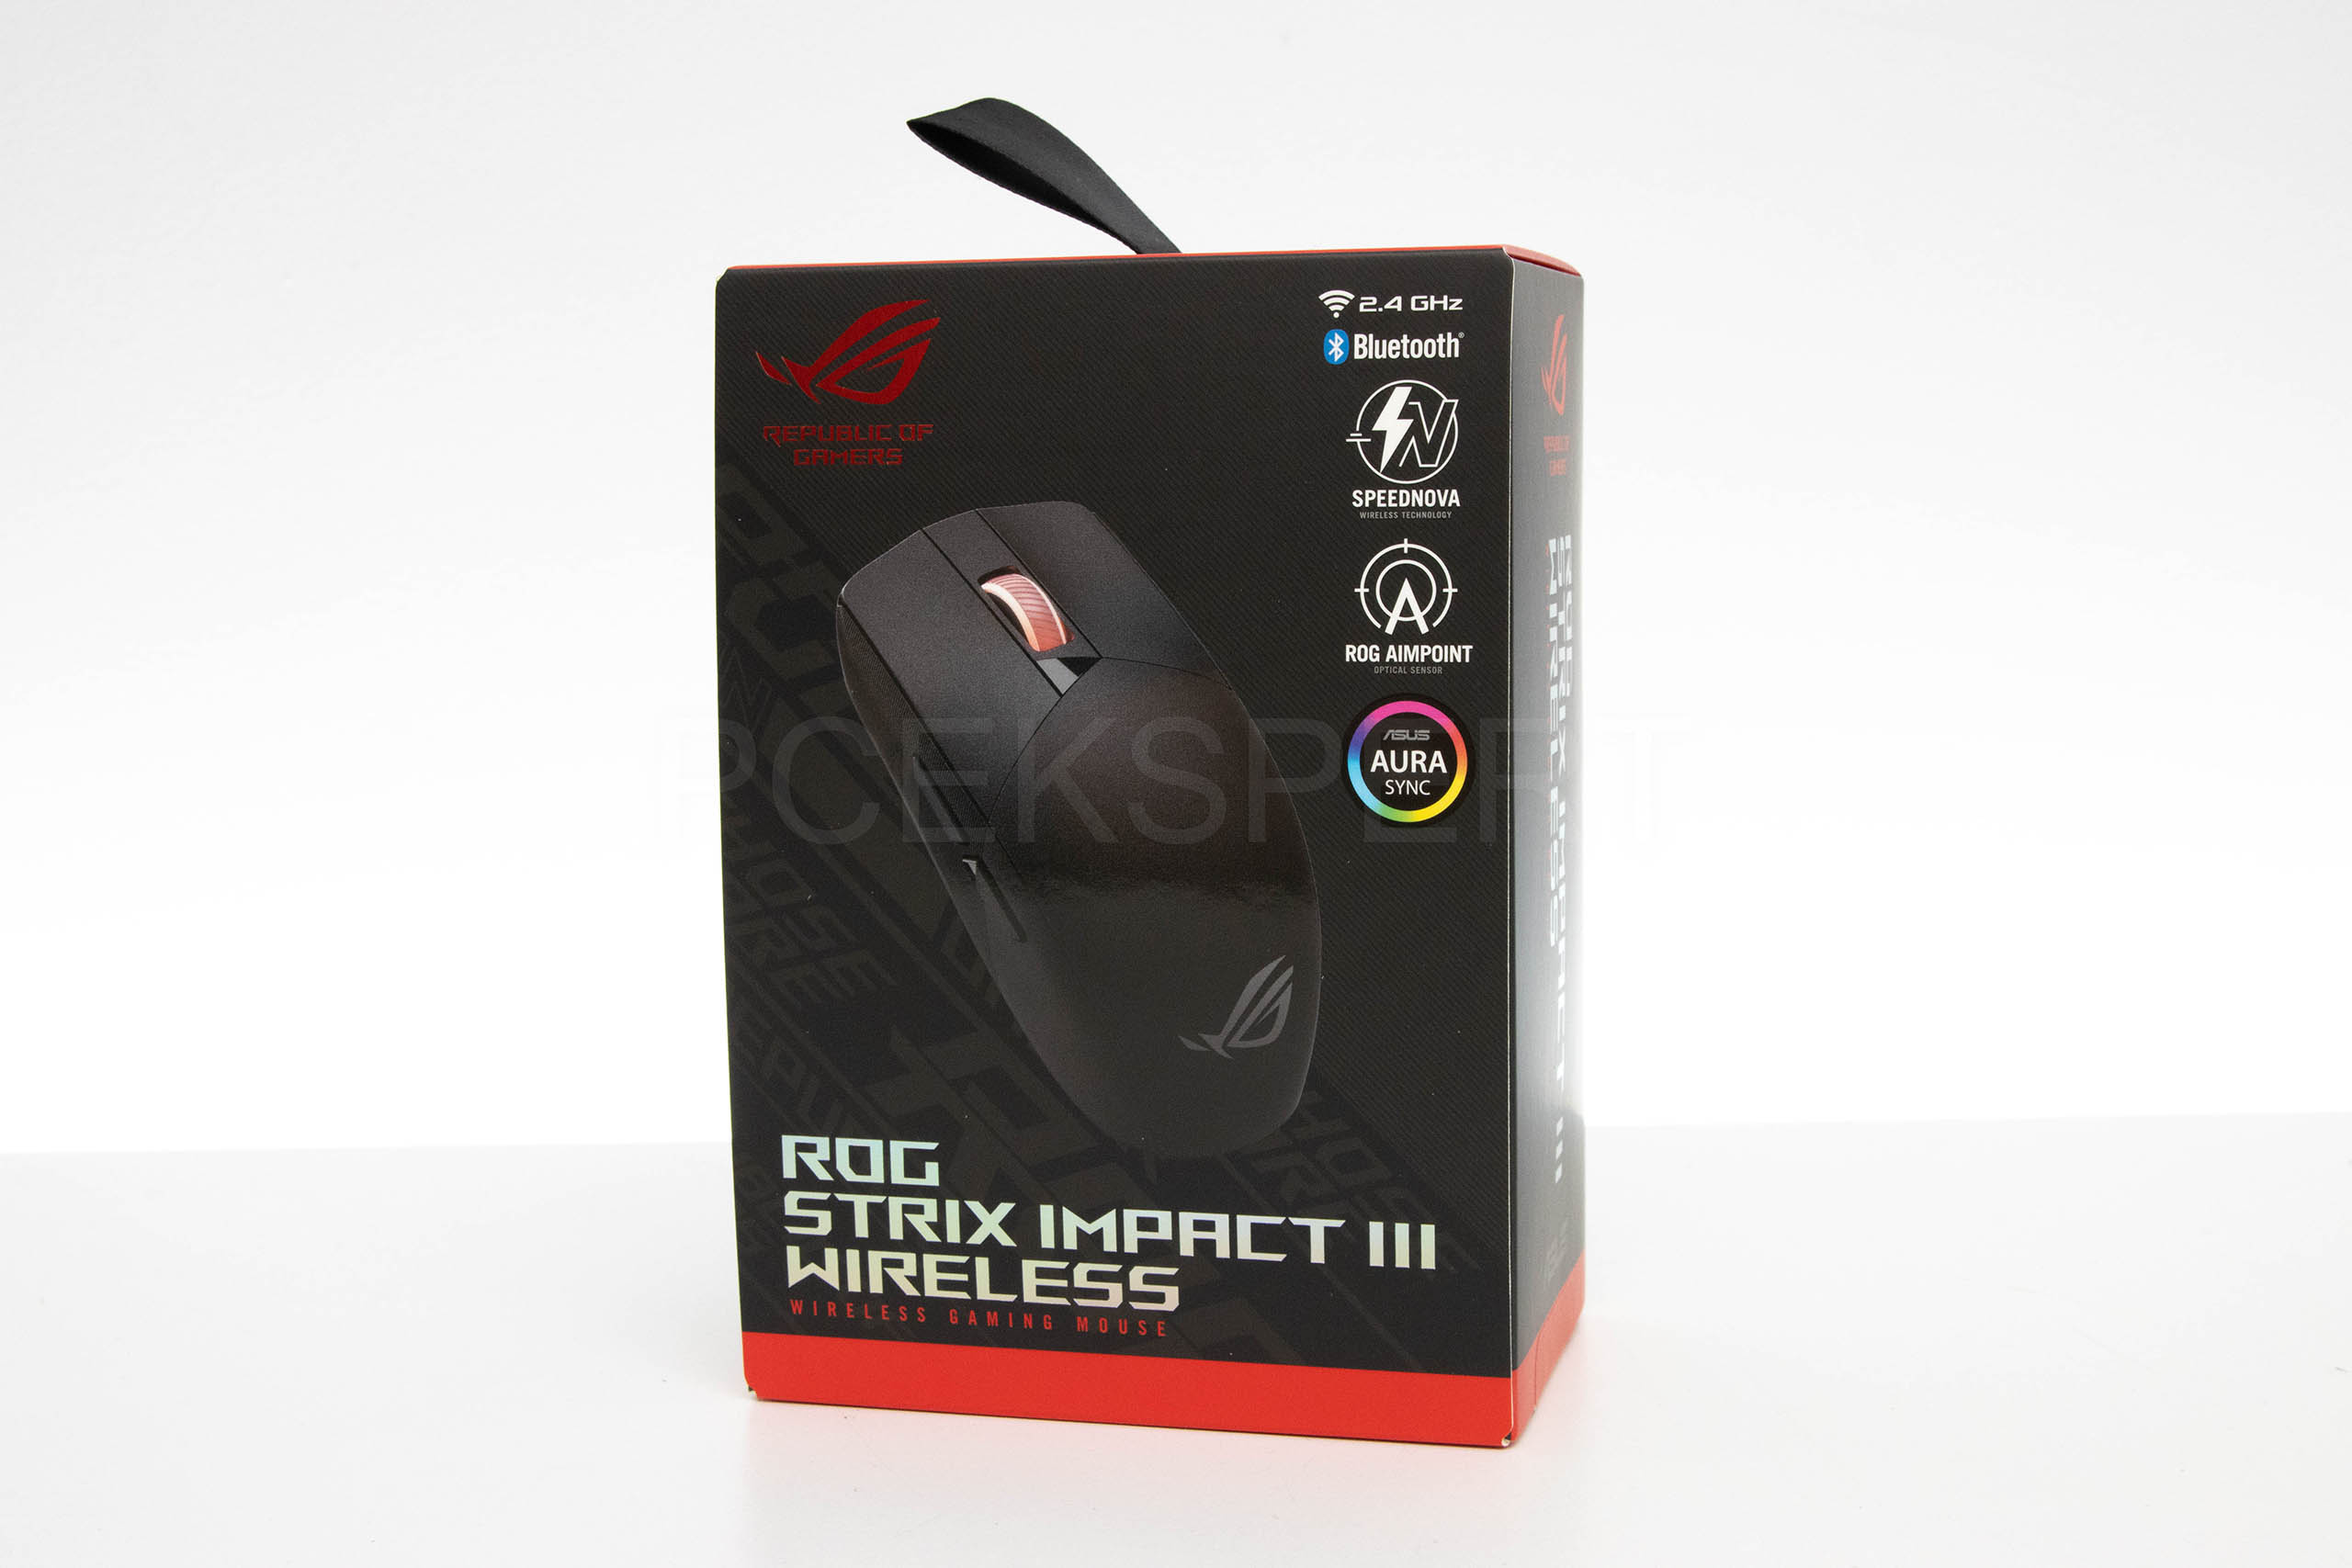 ASUS ROG Strix Impact III Wireless recenzija